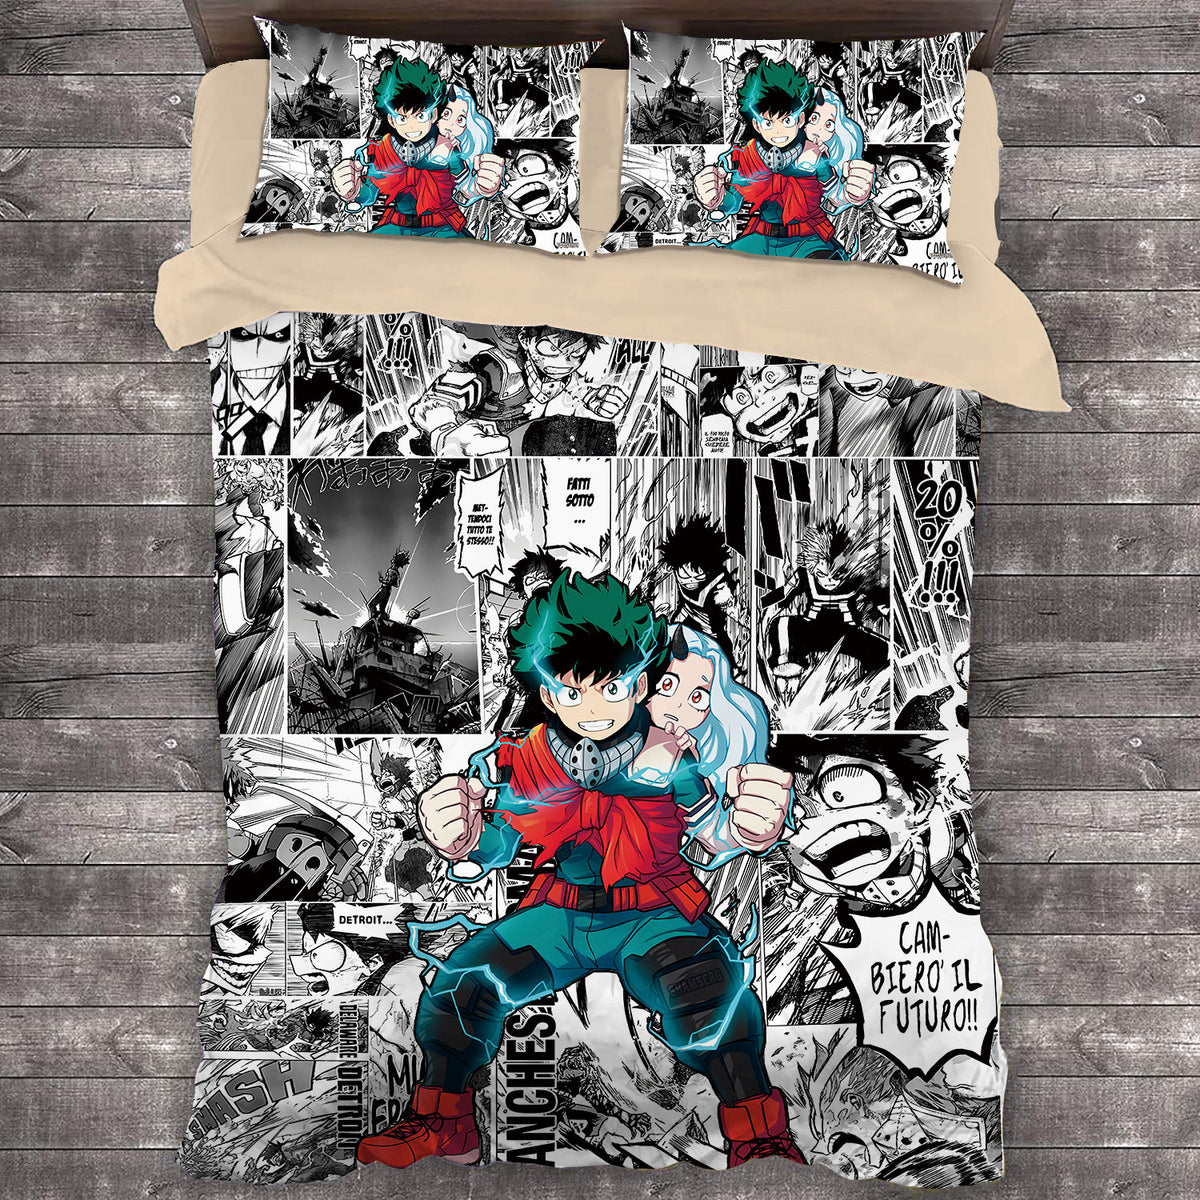 Comic My Hero Academia Midoriya Izuku #4 Duvet Cover Quilt Cover Pillowcase Bedding Set Bed Linen Home Decor